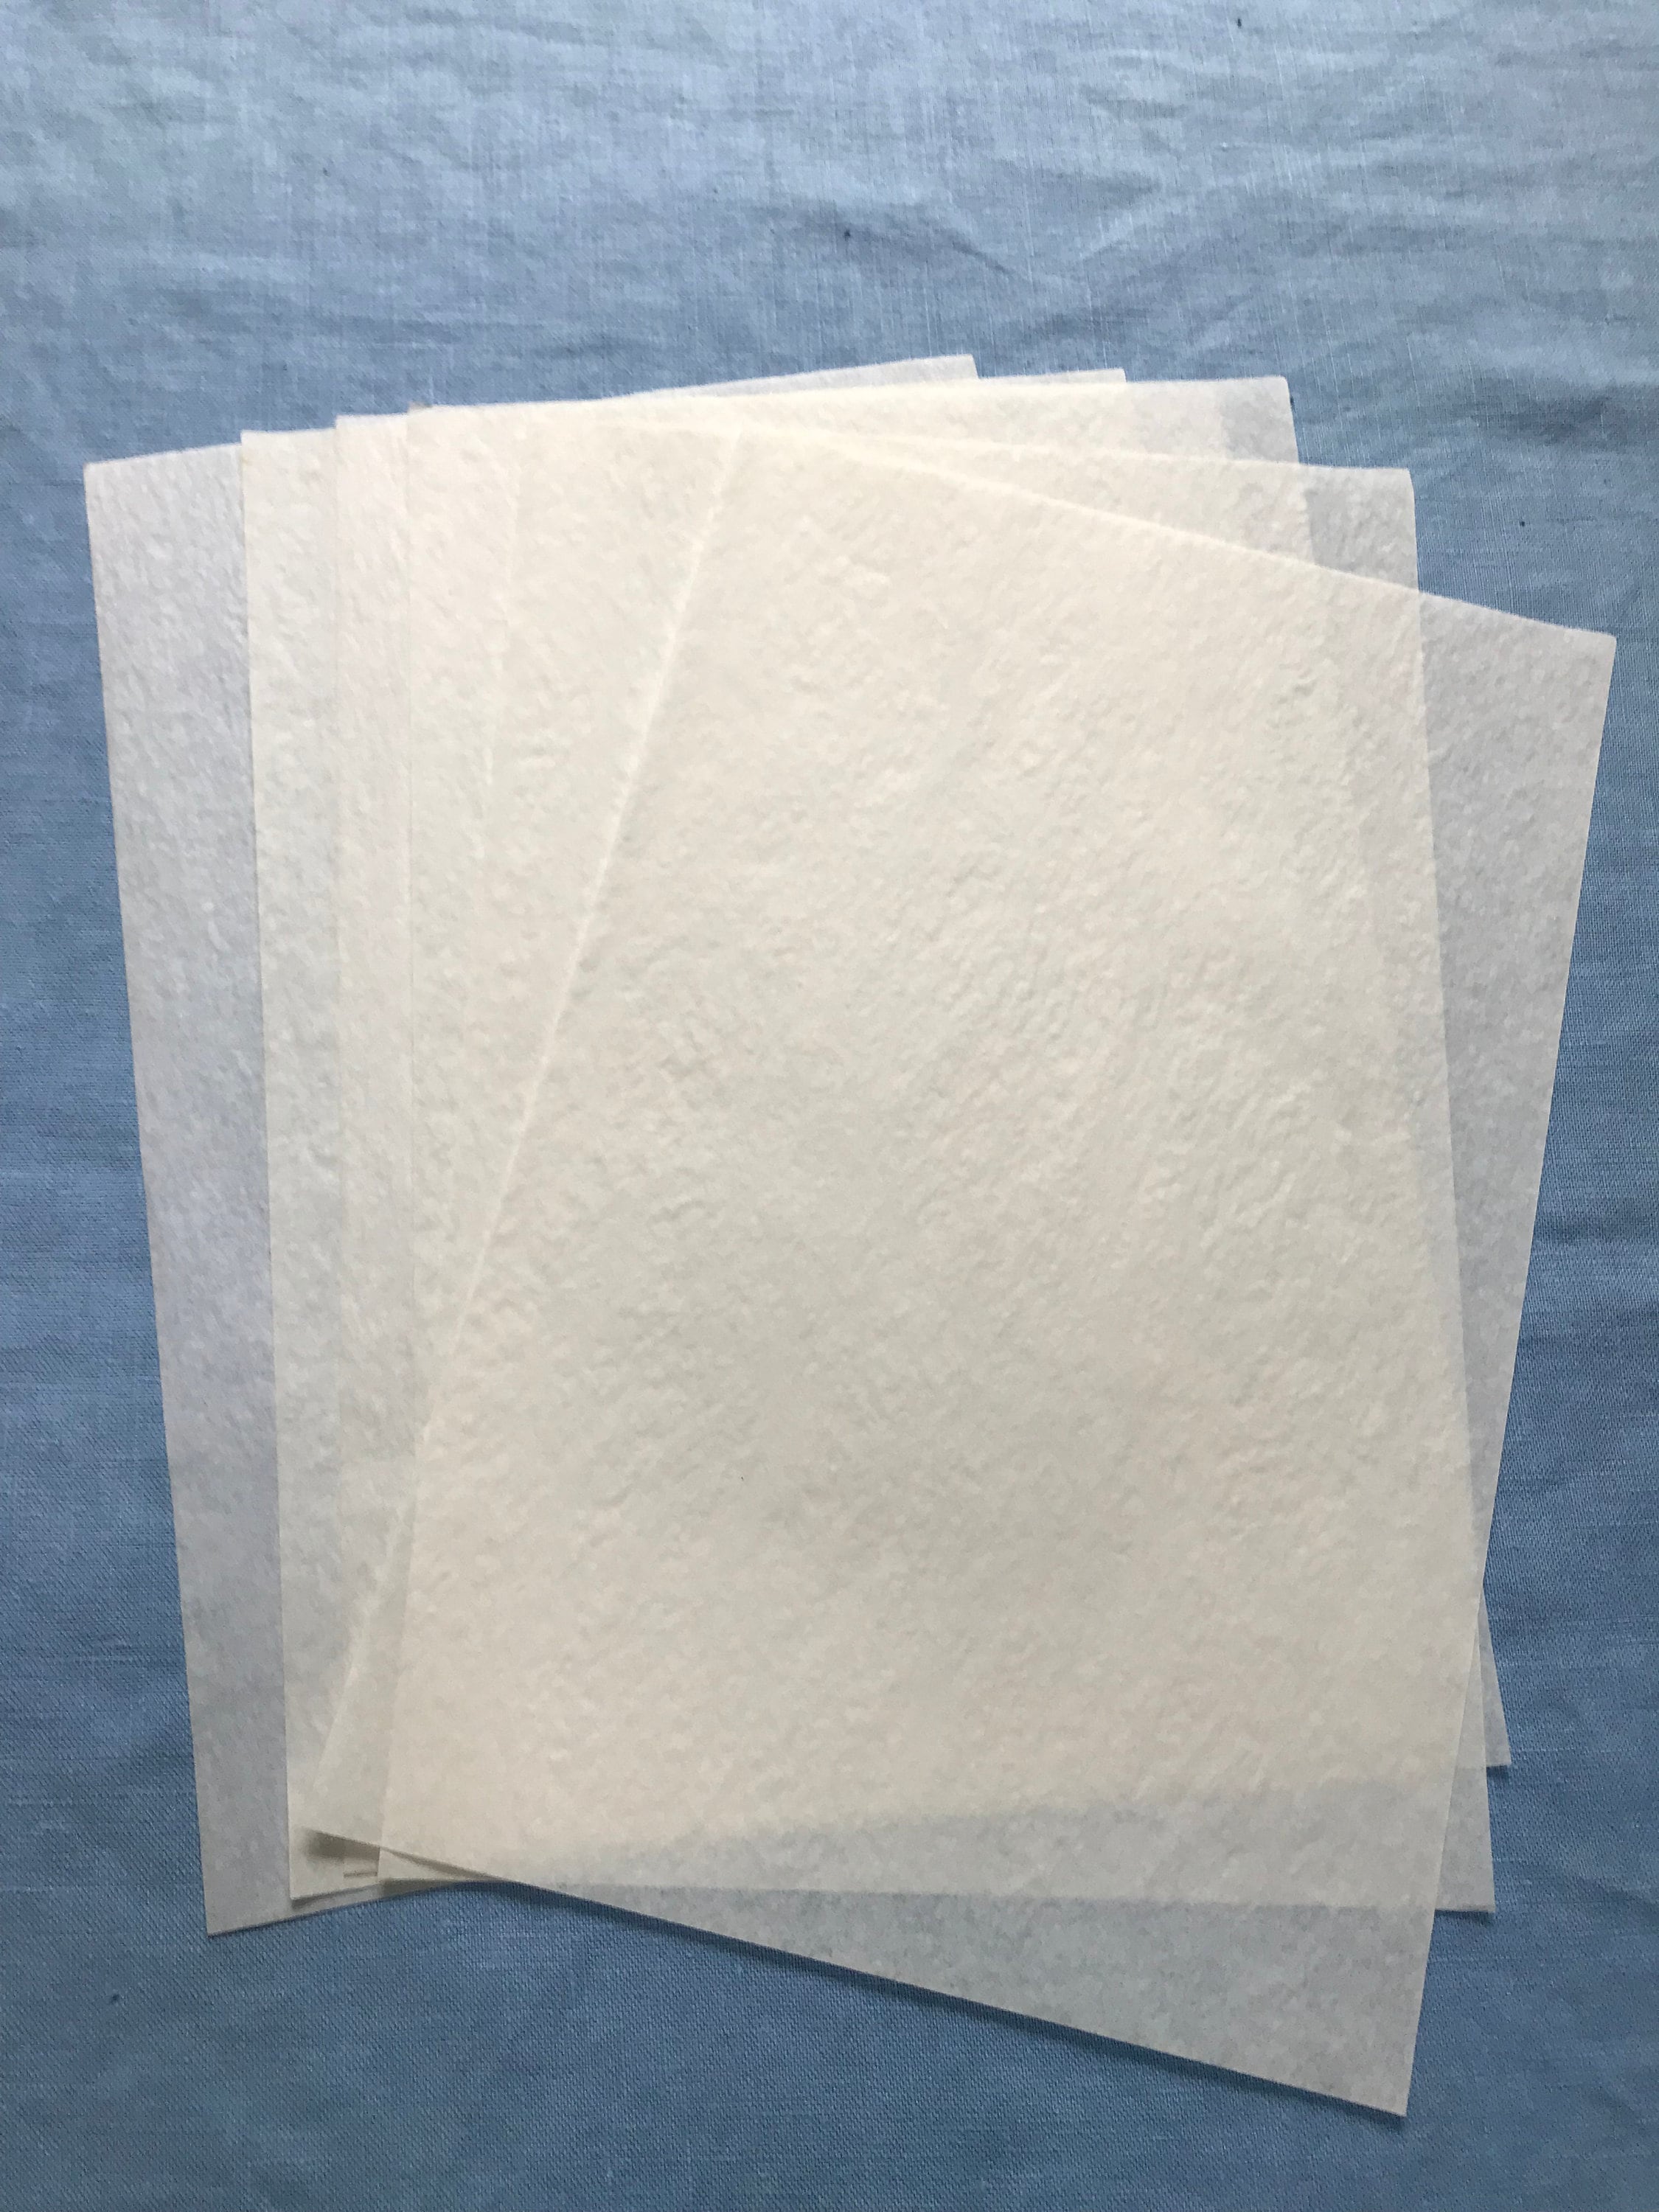 Esleeck FIDELITY® Onion Skin 25% Cotton Rag Watermarked 10# Paper